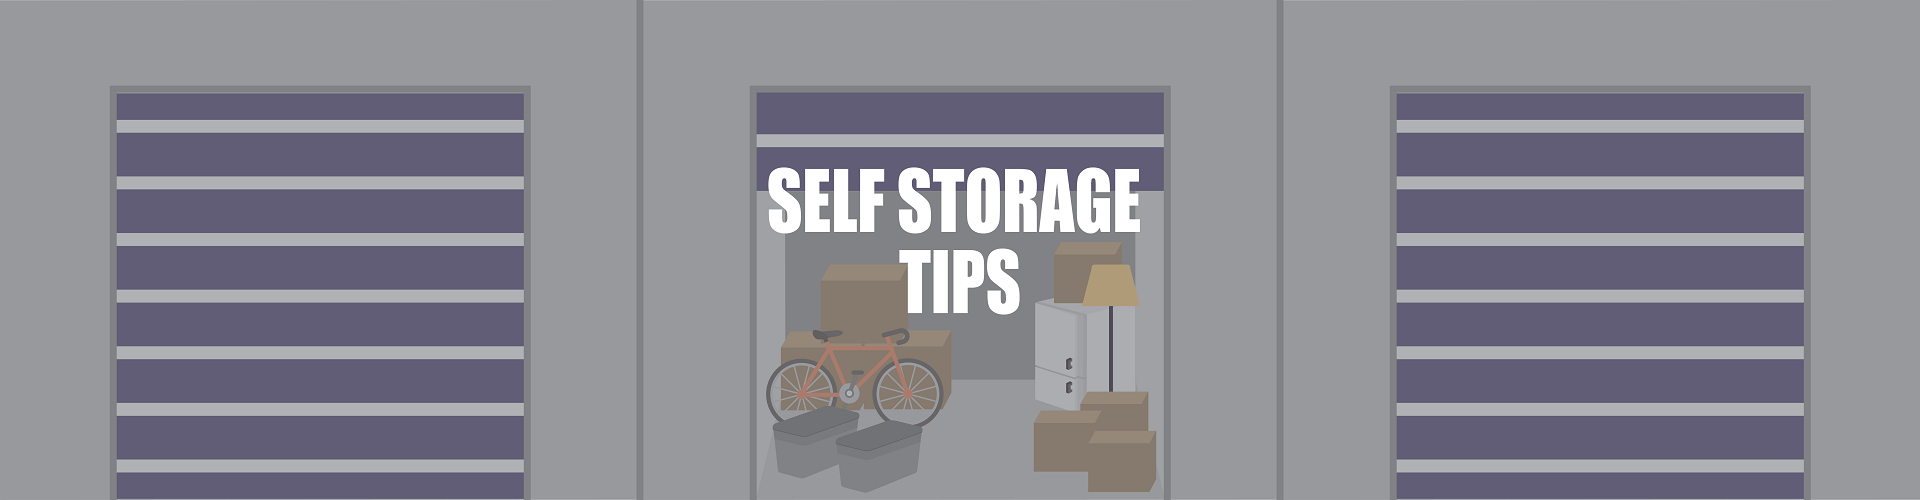 self storage tips - ProSafe Storage